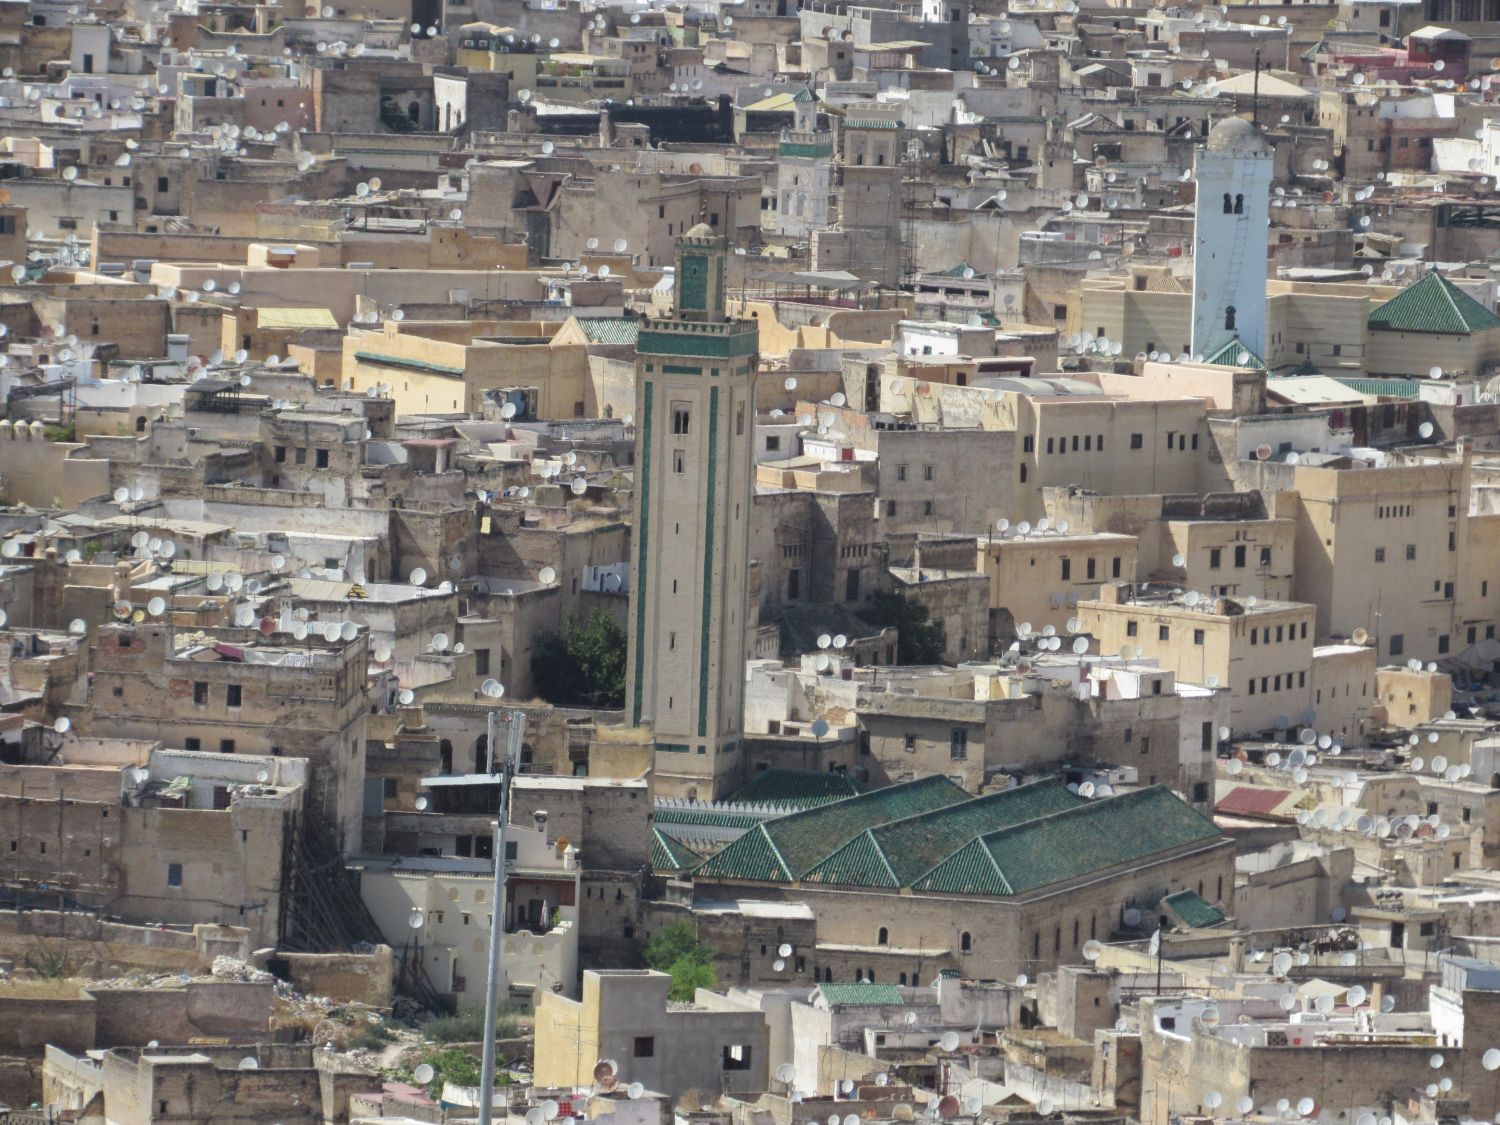 Exterior view, minaret and Fez skyline toward the white minaret of the Qarawiyyin Mosque.